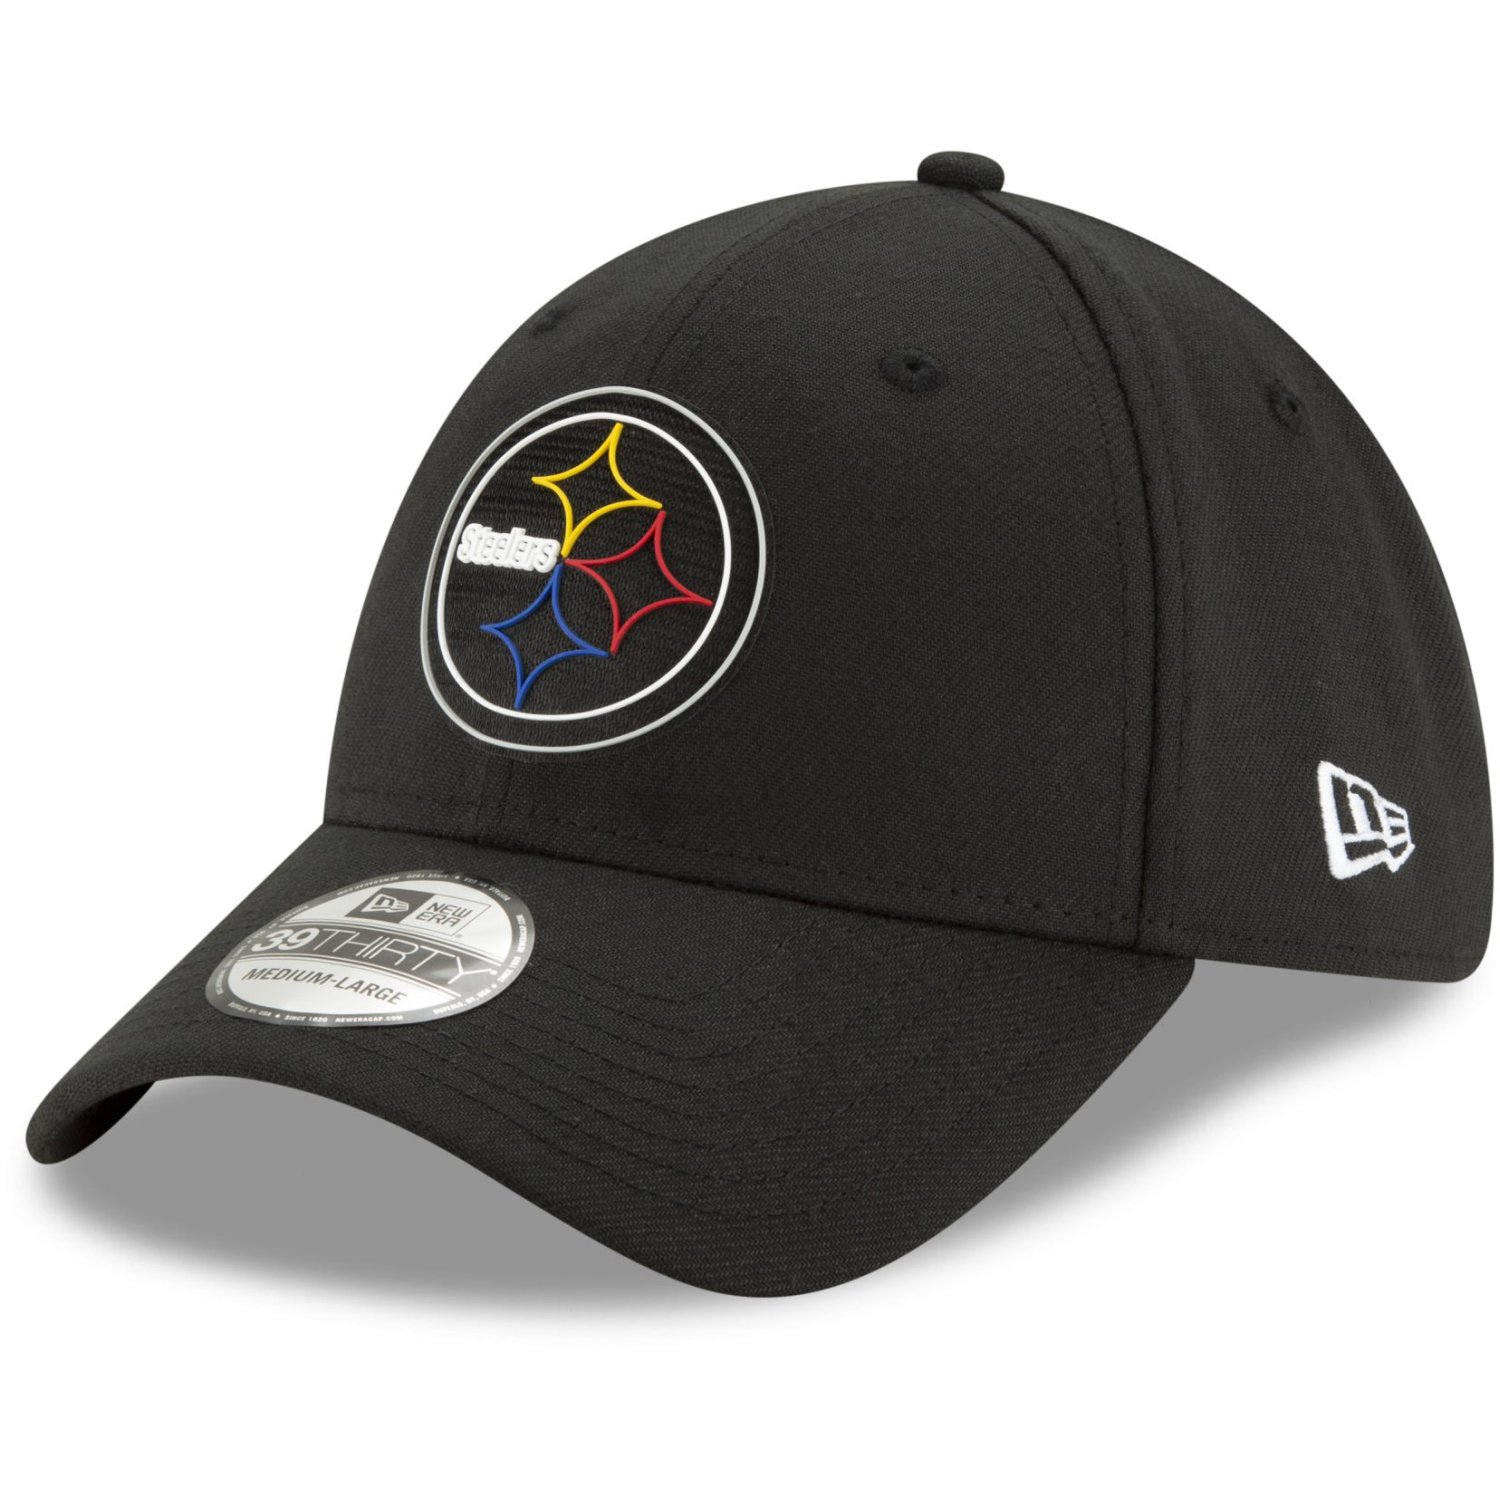 Steelers Cap Logo : New Era Pittsburgh Steelers 59FIFTY Cap & Reviews ...